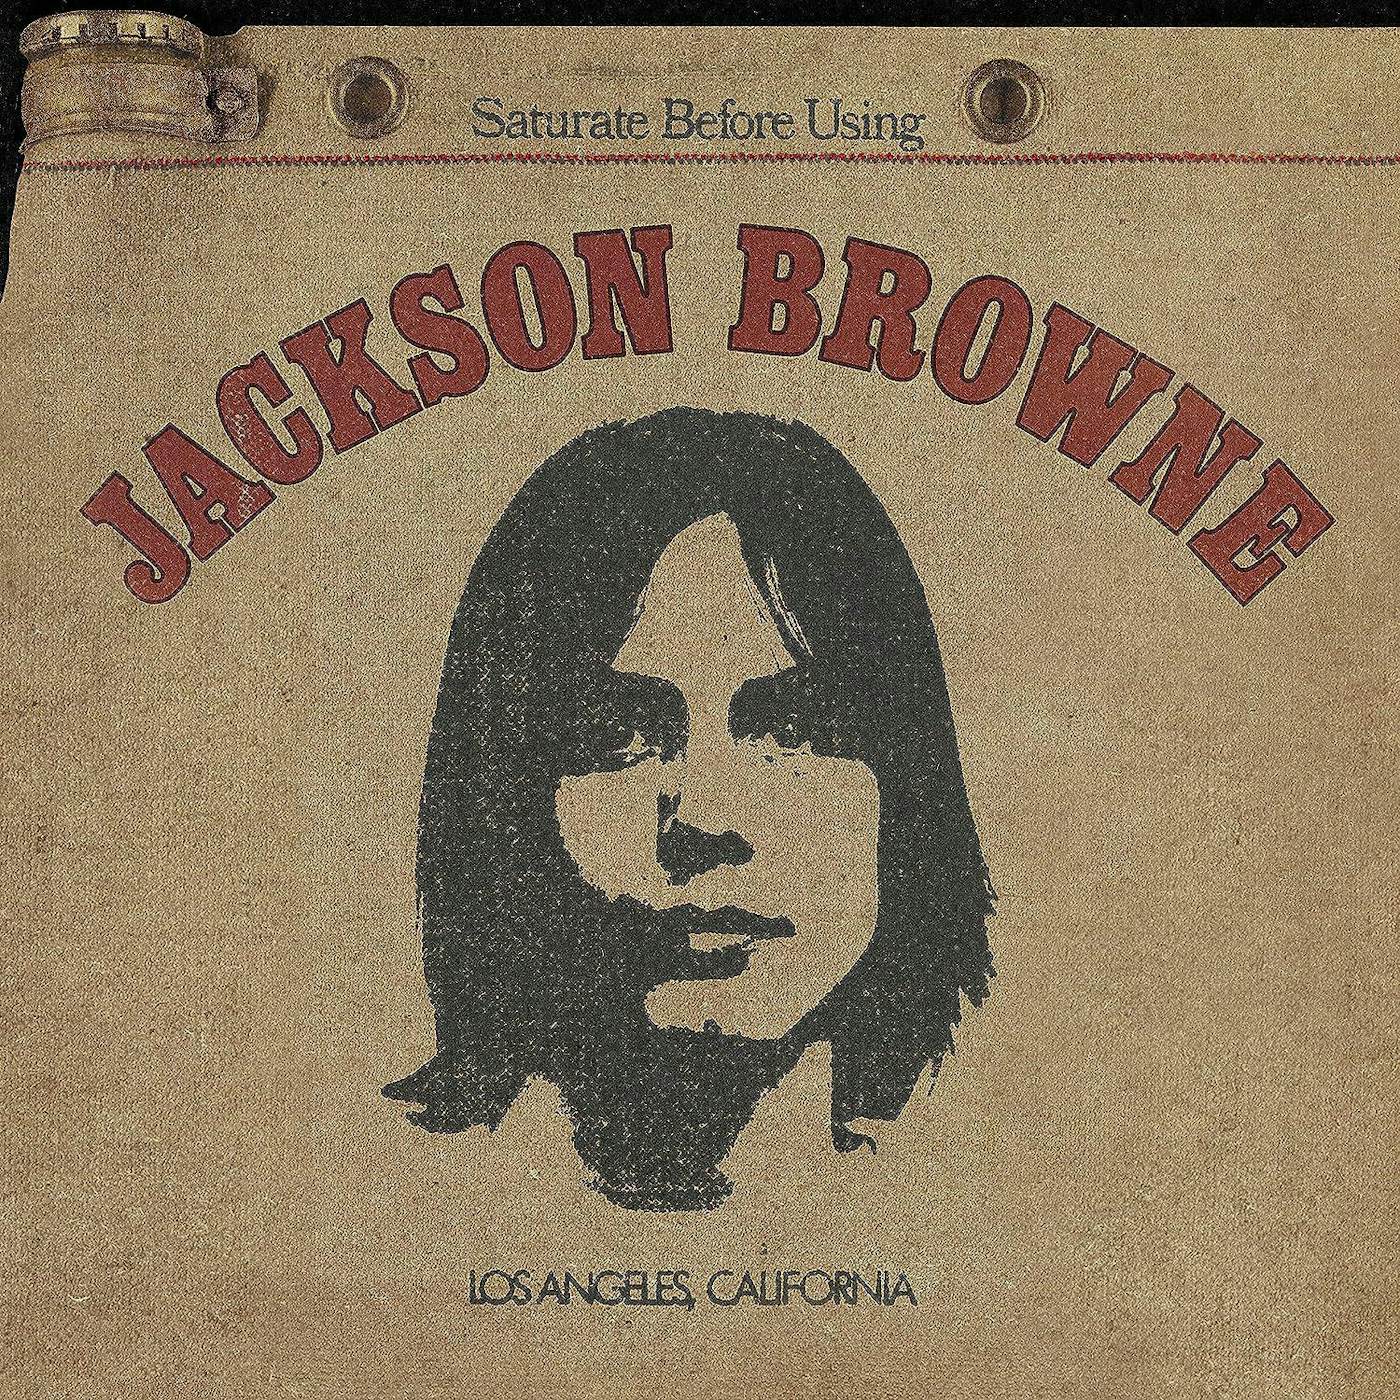  Jackson Browne S/T (180g) Vinyl Record